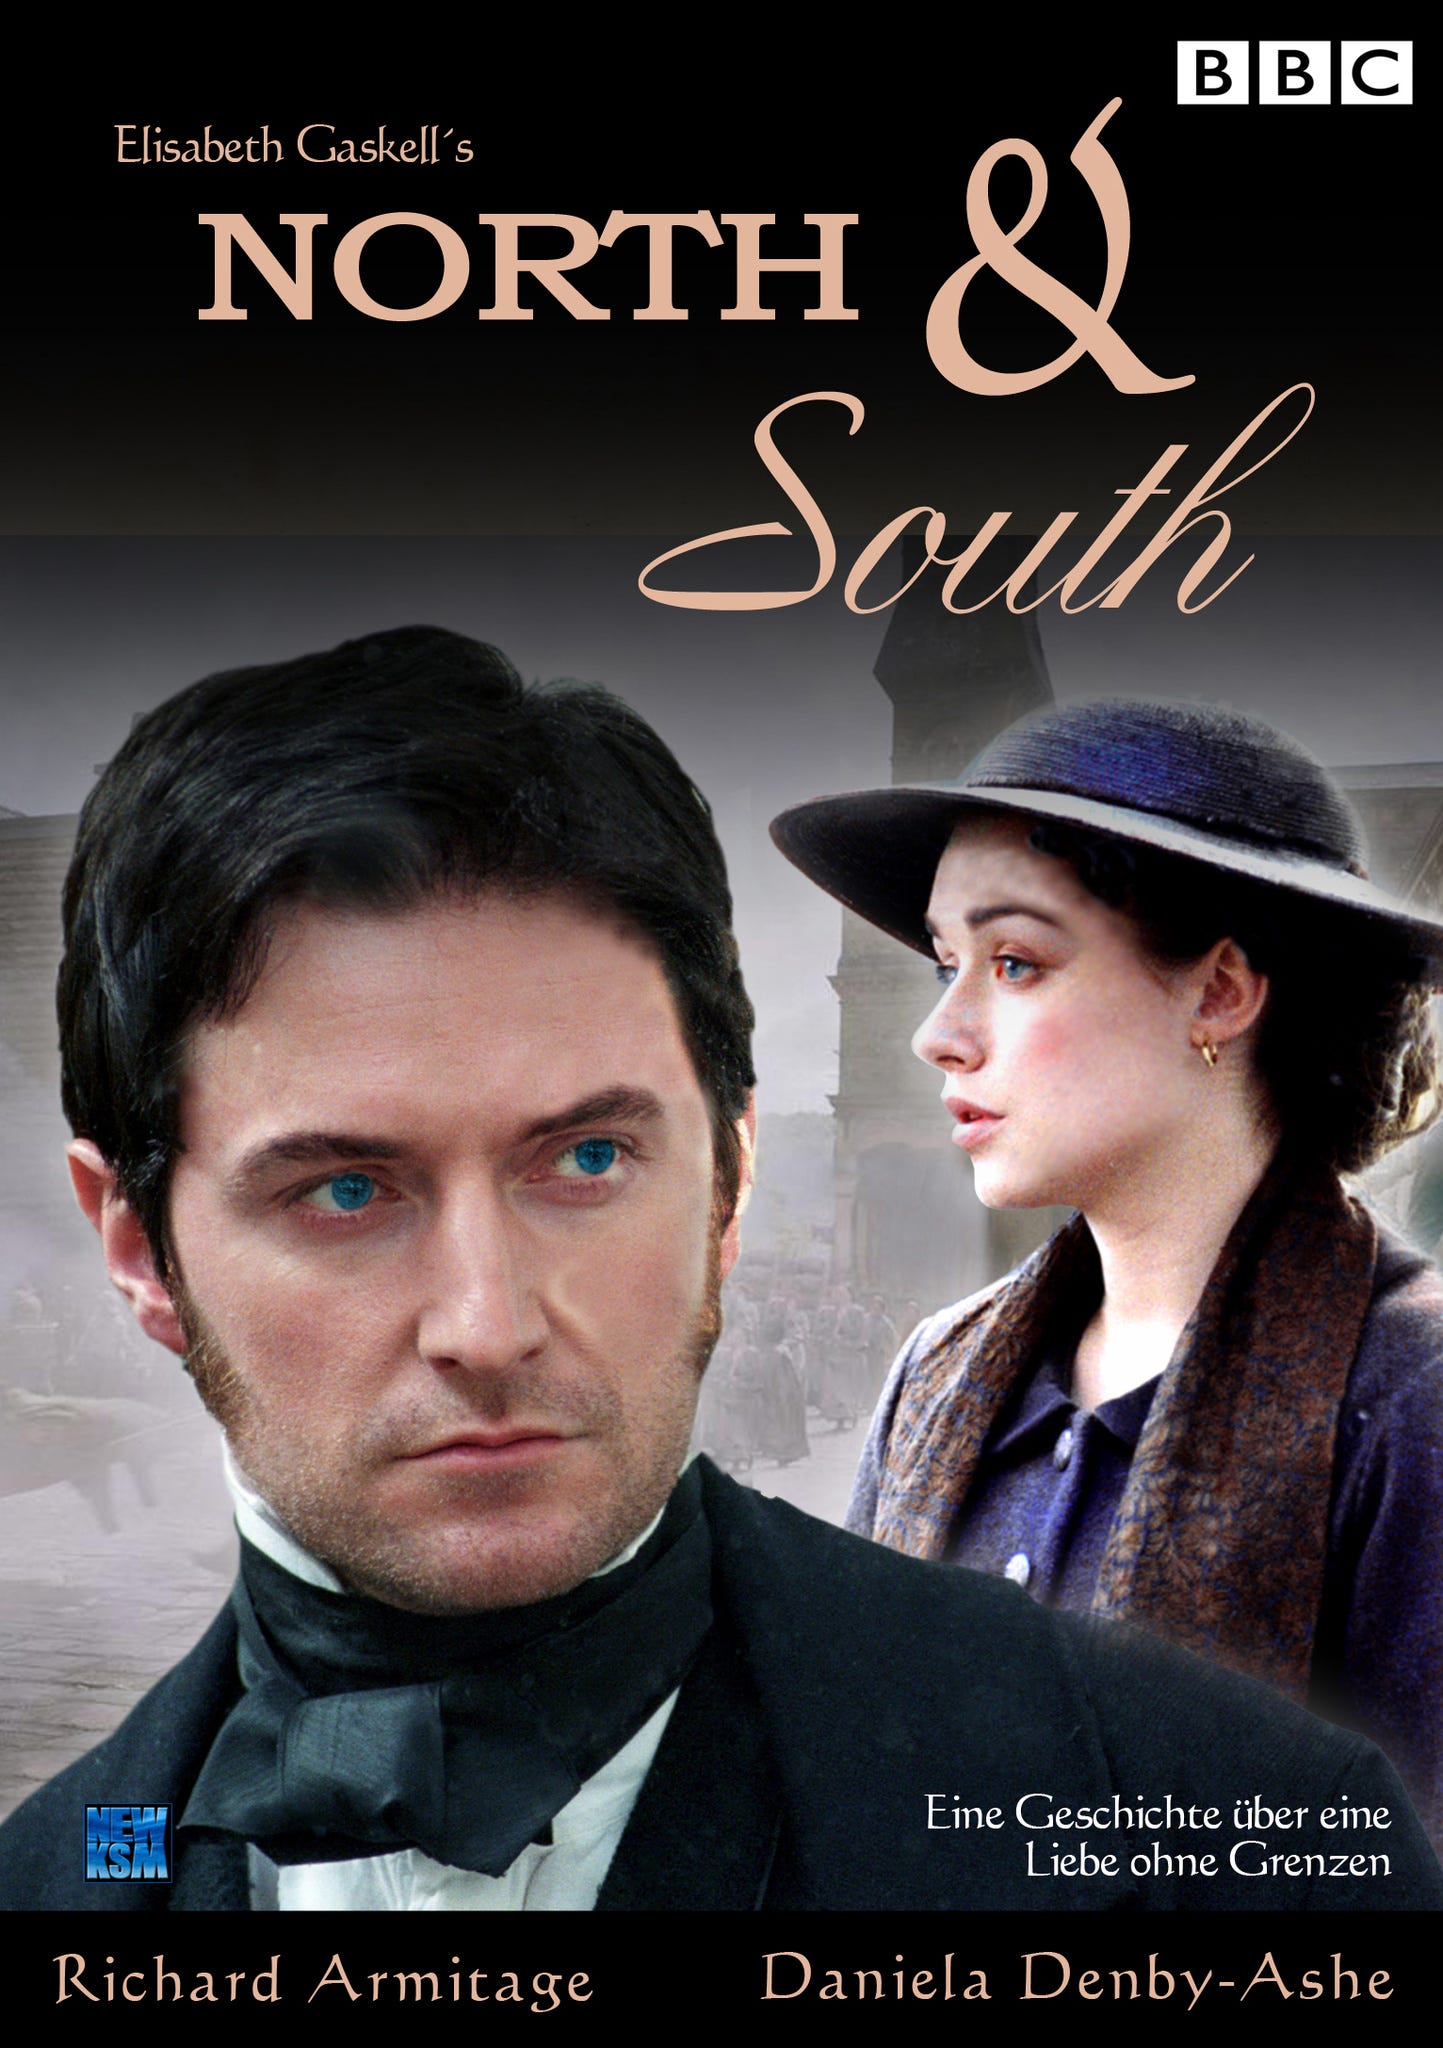 North & South (TV Mini Series 2004) - IMDb